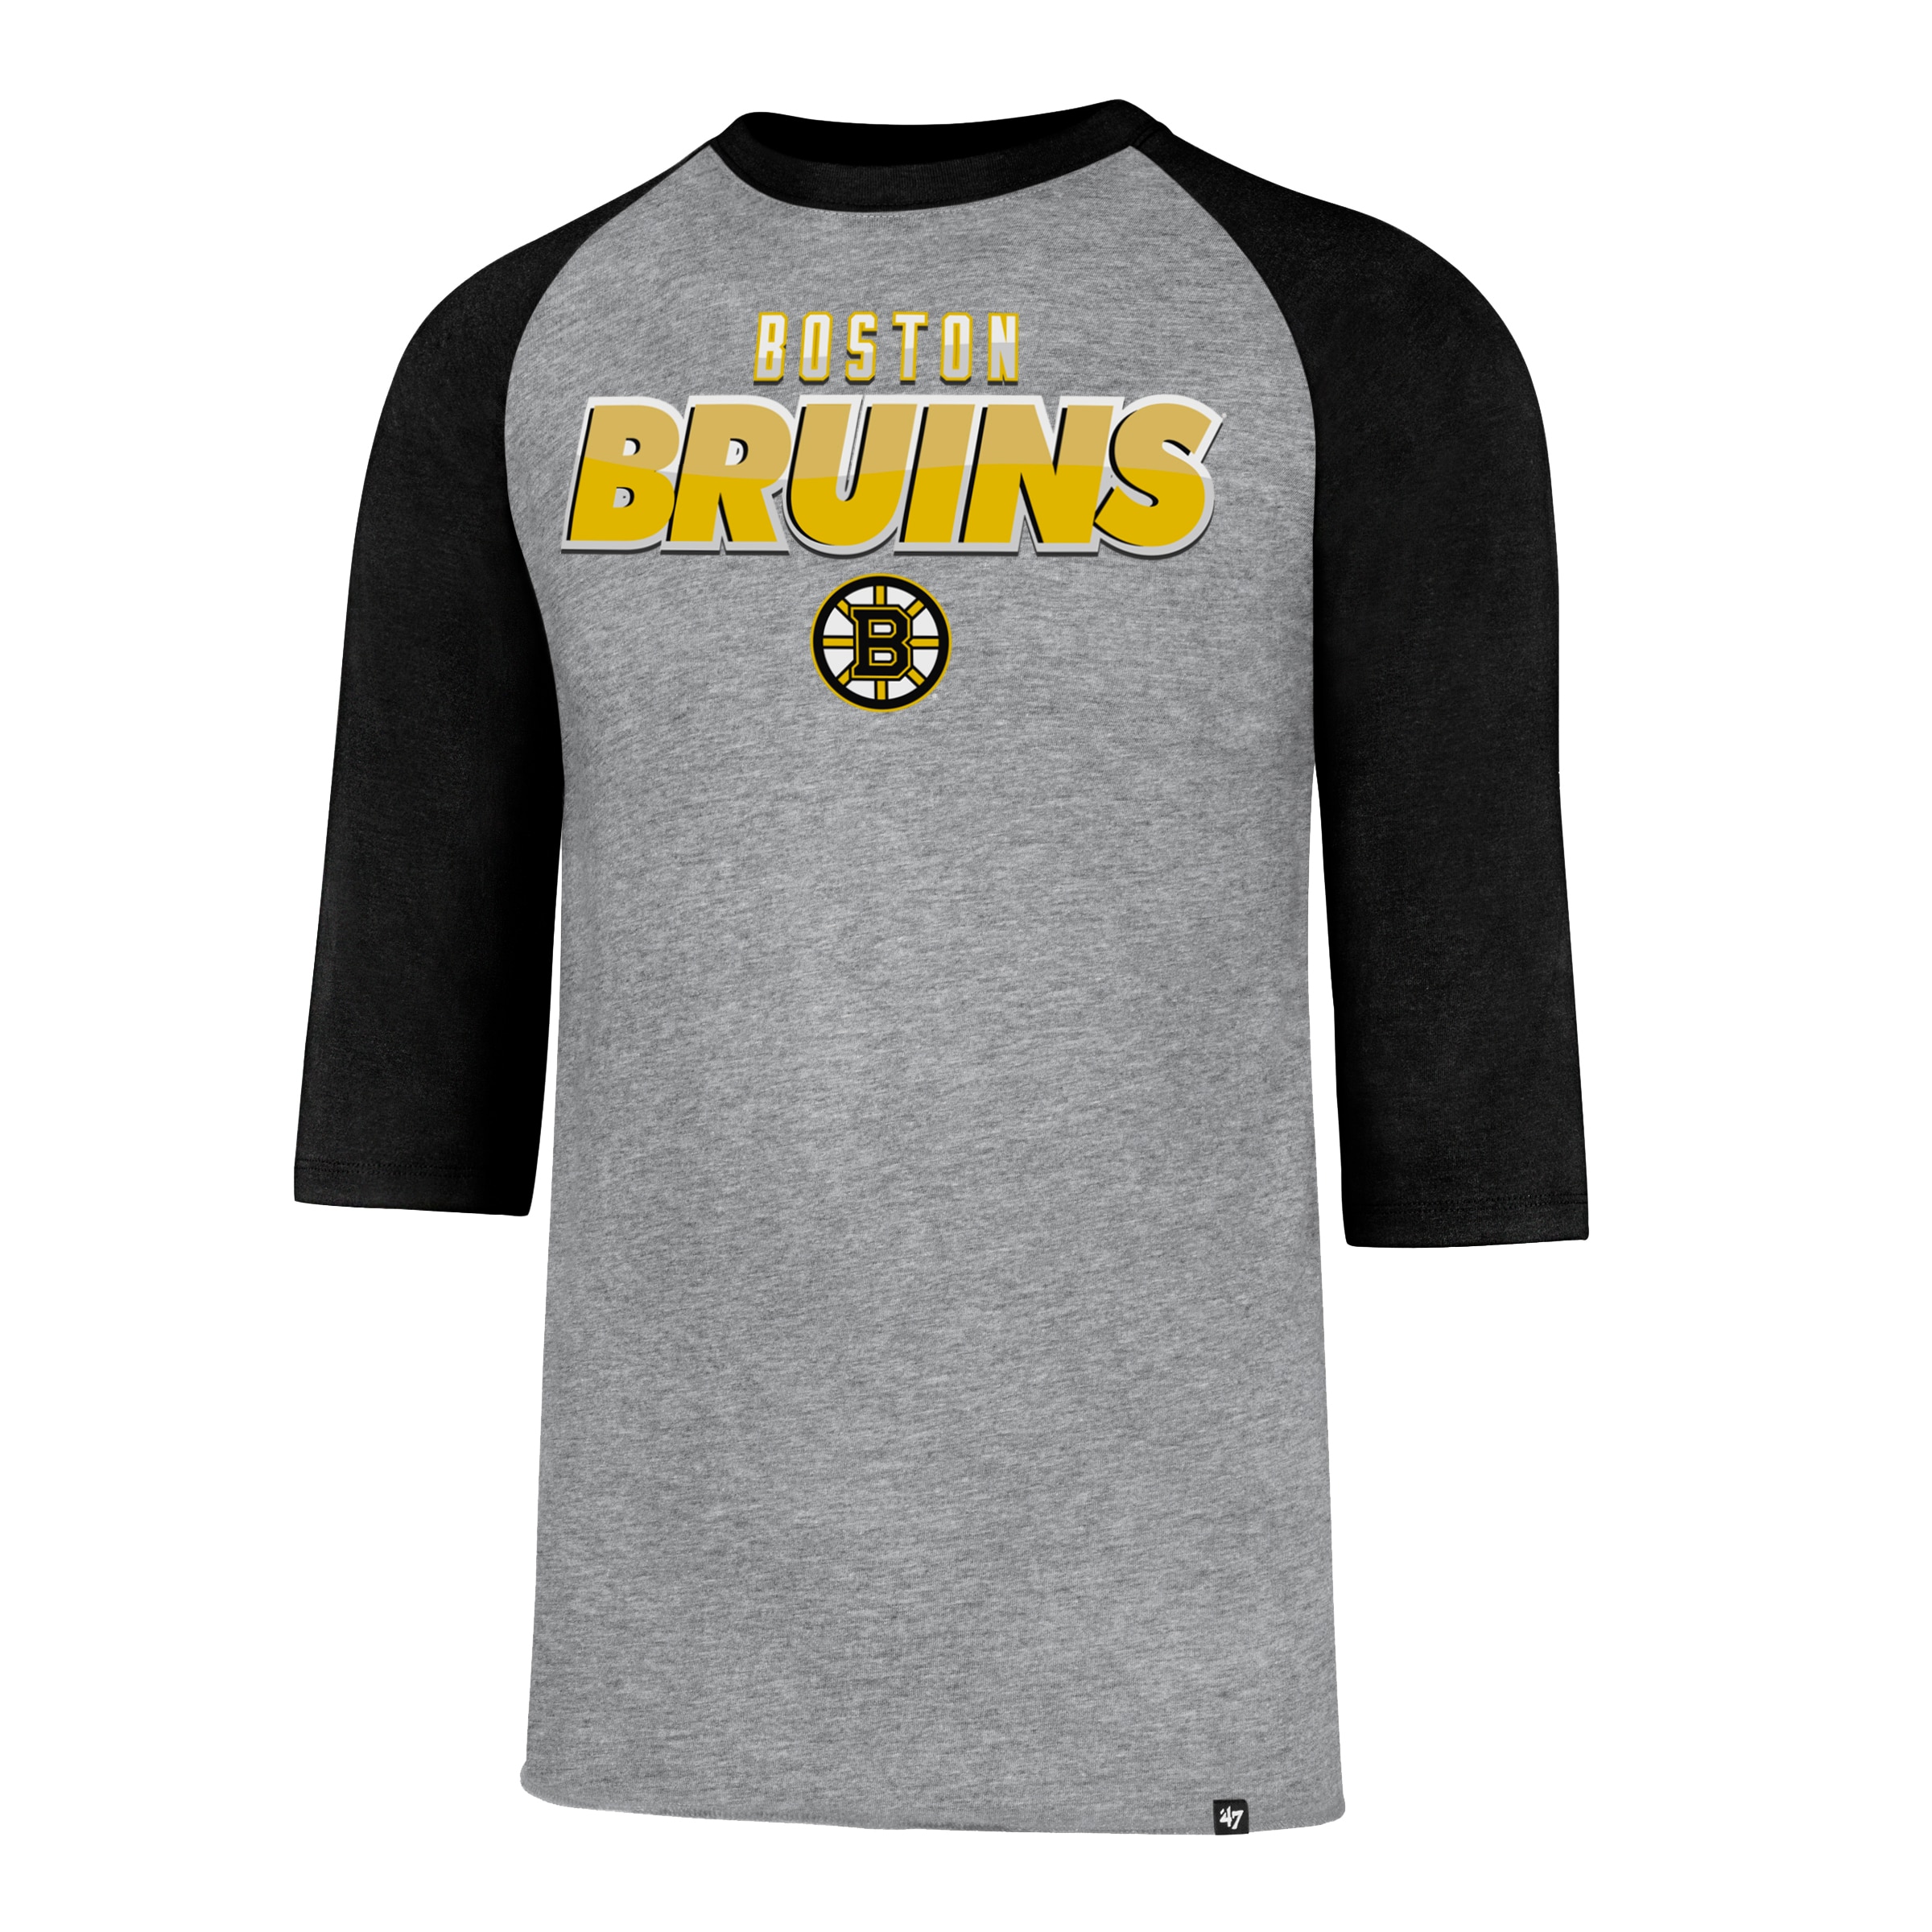 Boston Bruins '47 Club T-Shirt 